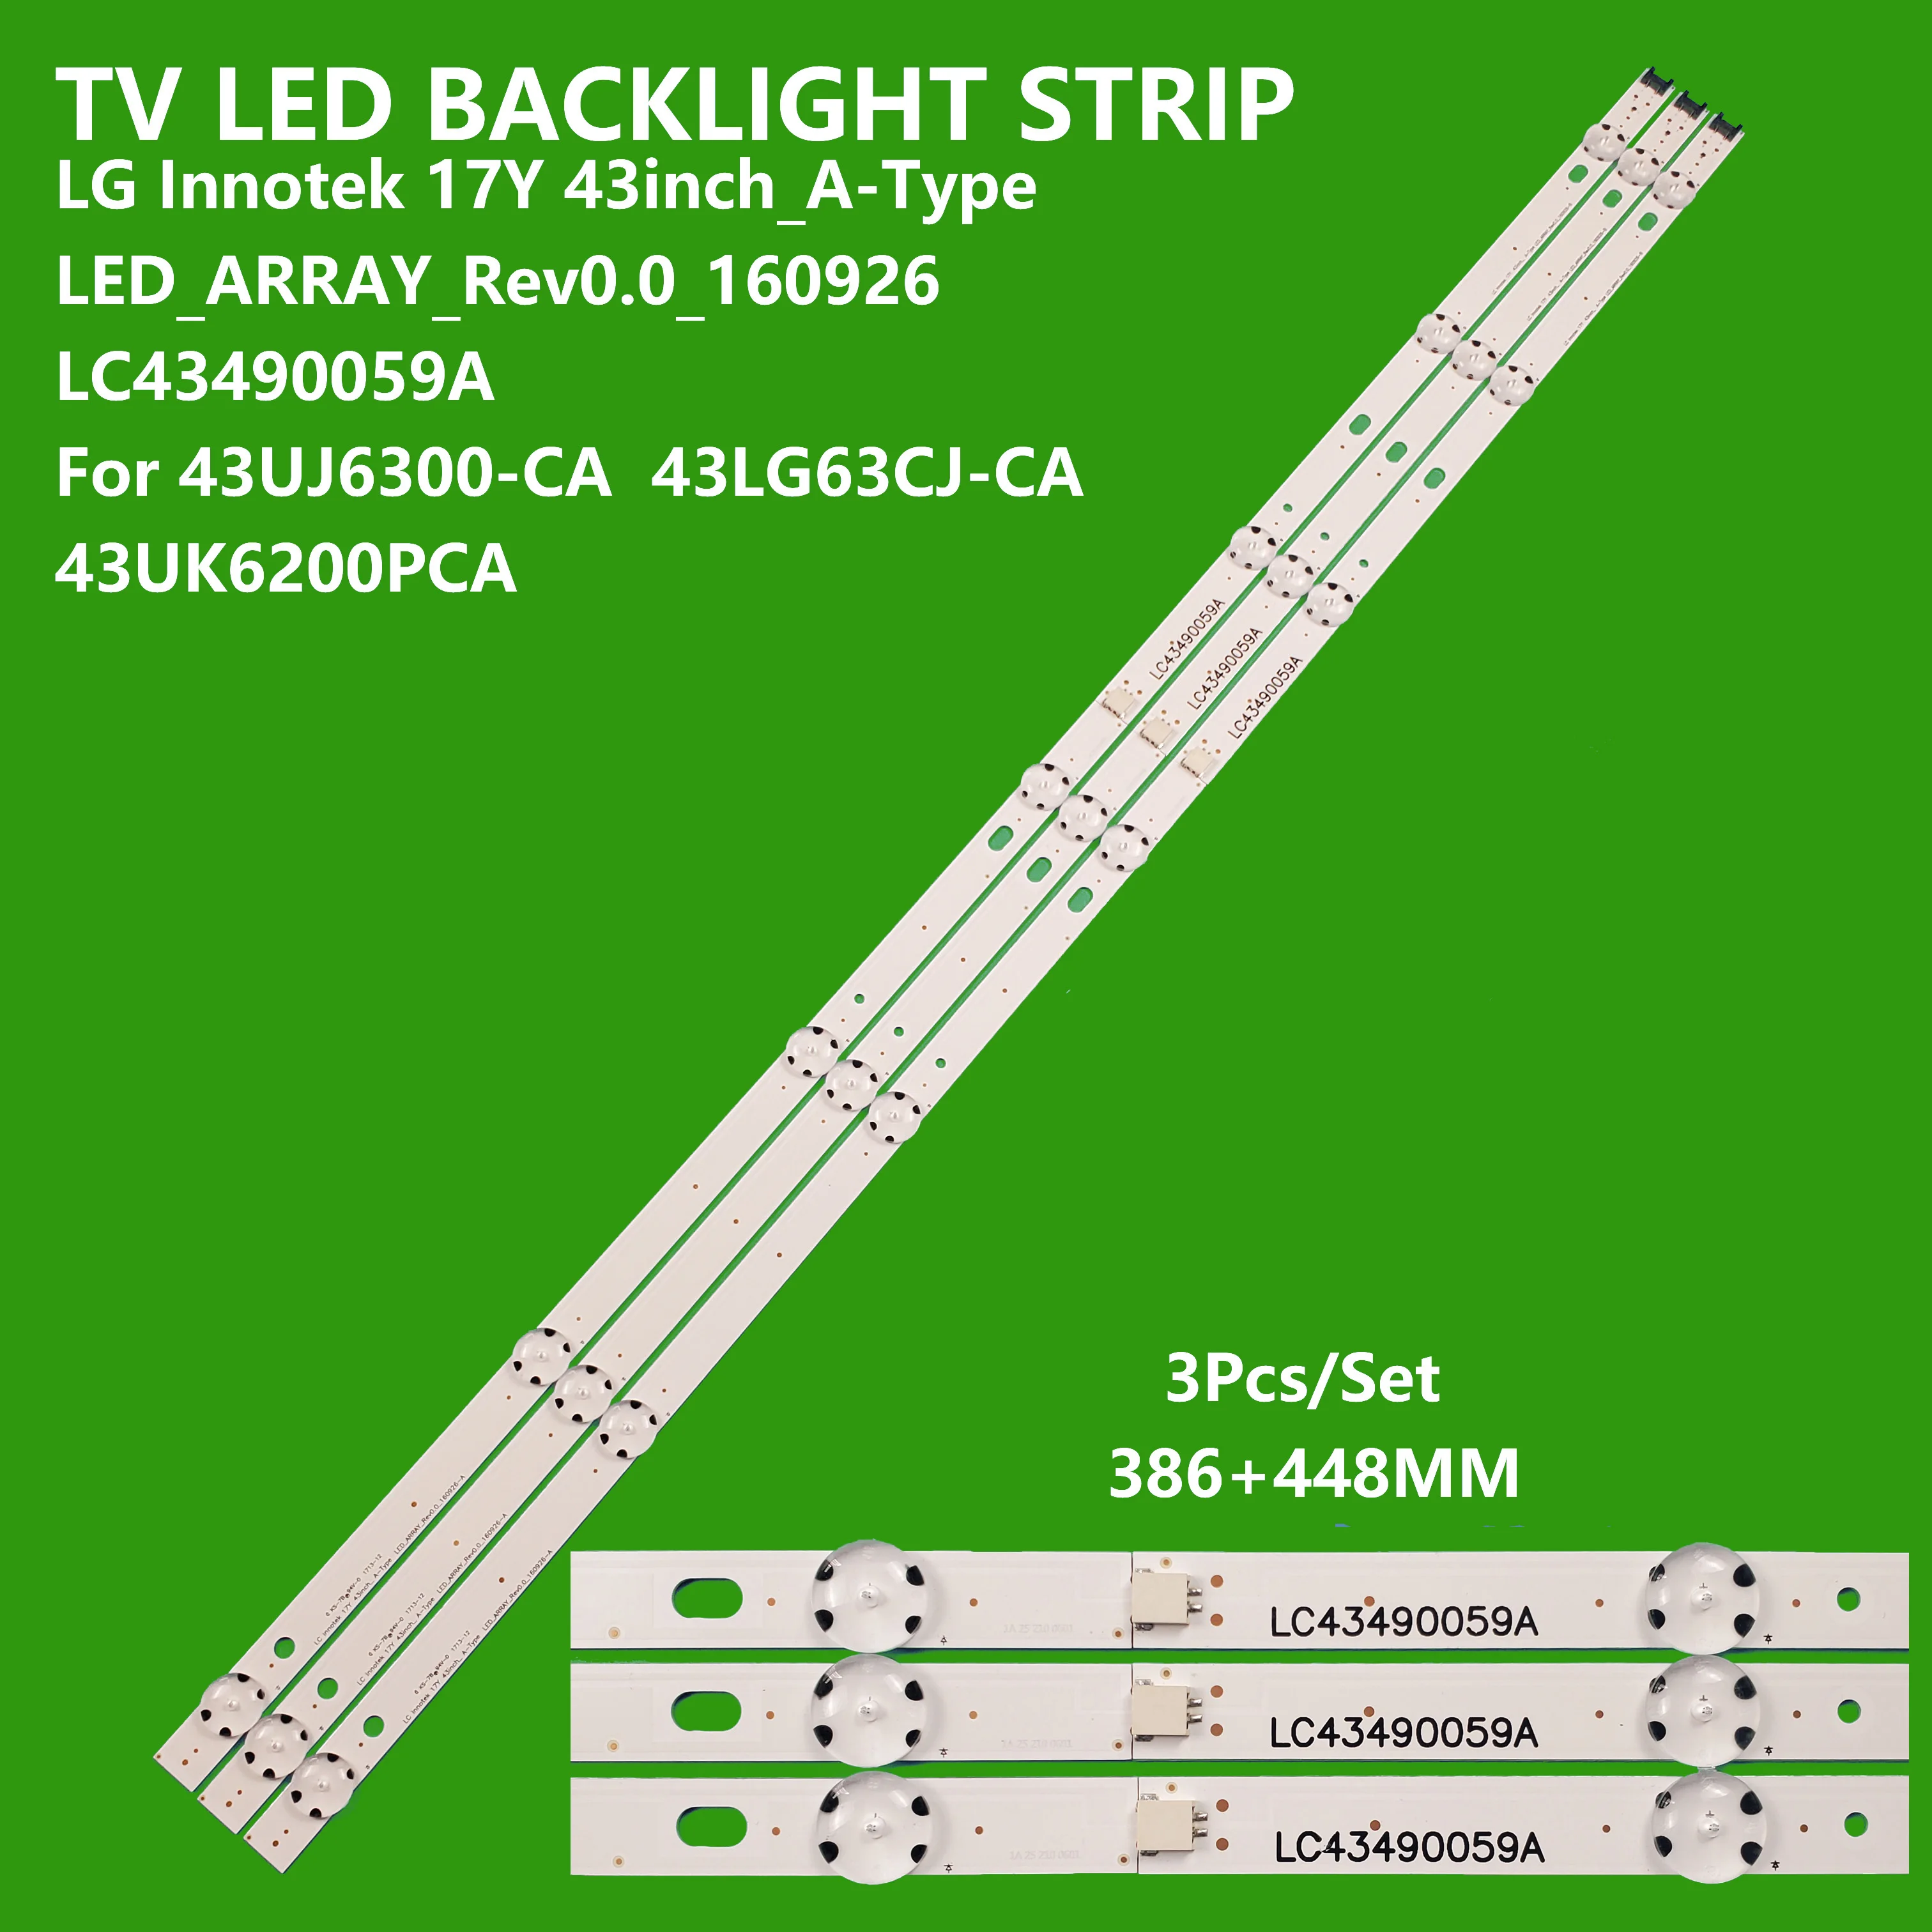 LED TV LED Backlight Strips LC43490059A For 43UJ6300-CA 43LG63CJ-CA 43UK6200PCA Backlight TV LED STRIP 3pcs/set